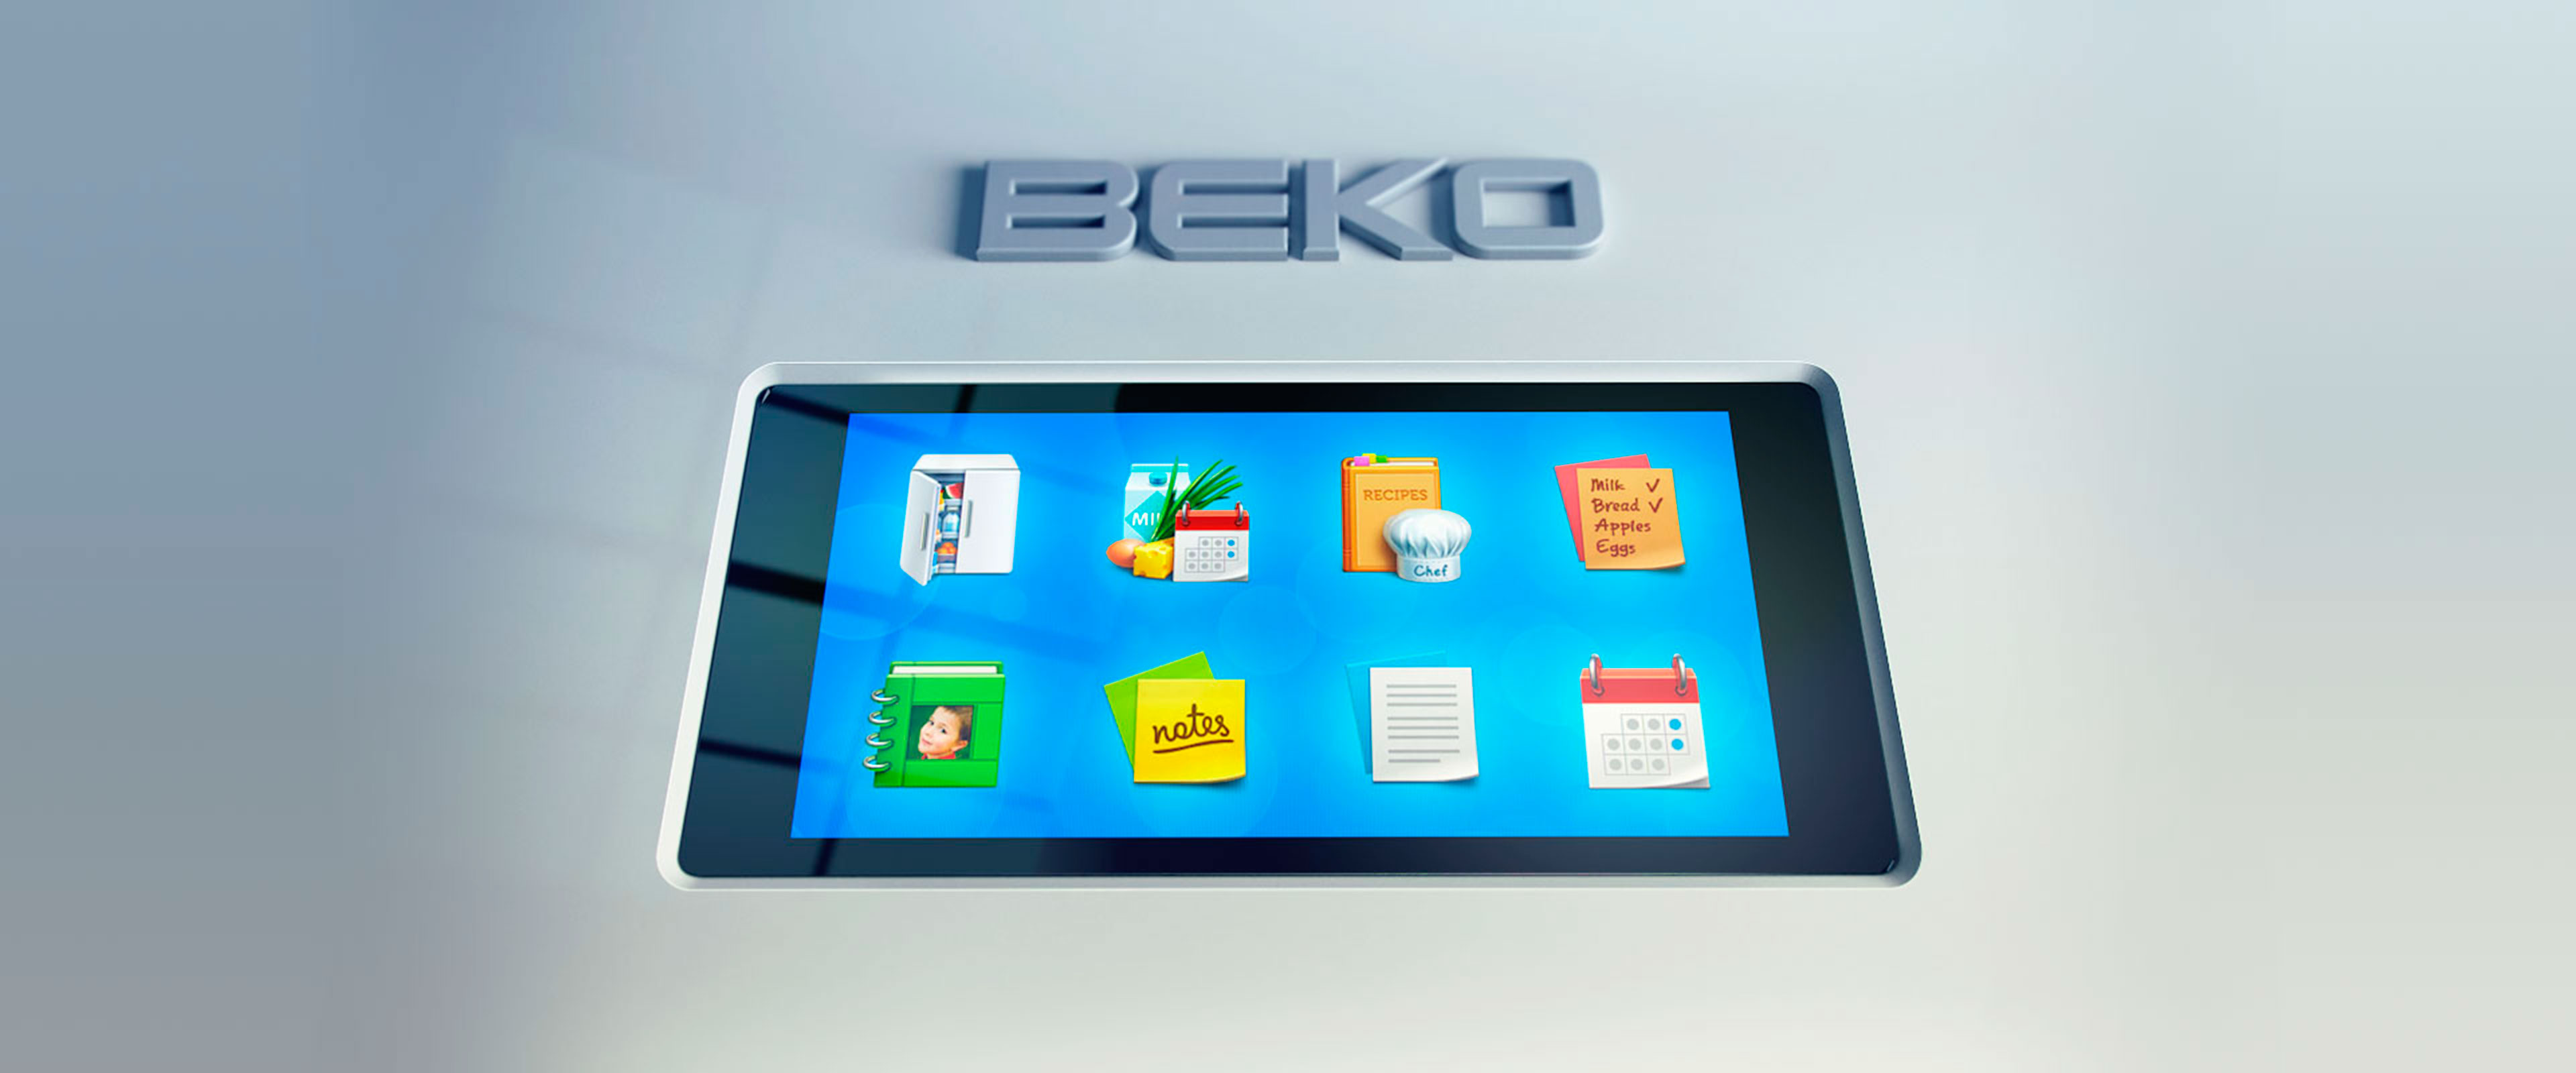 Custom icons design on BEKO refrigerator interface